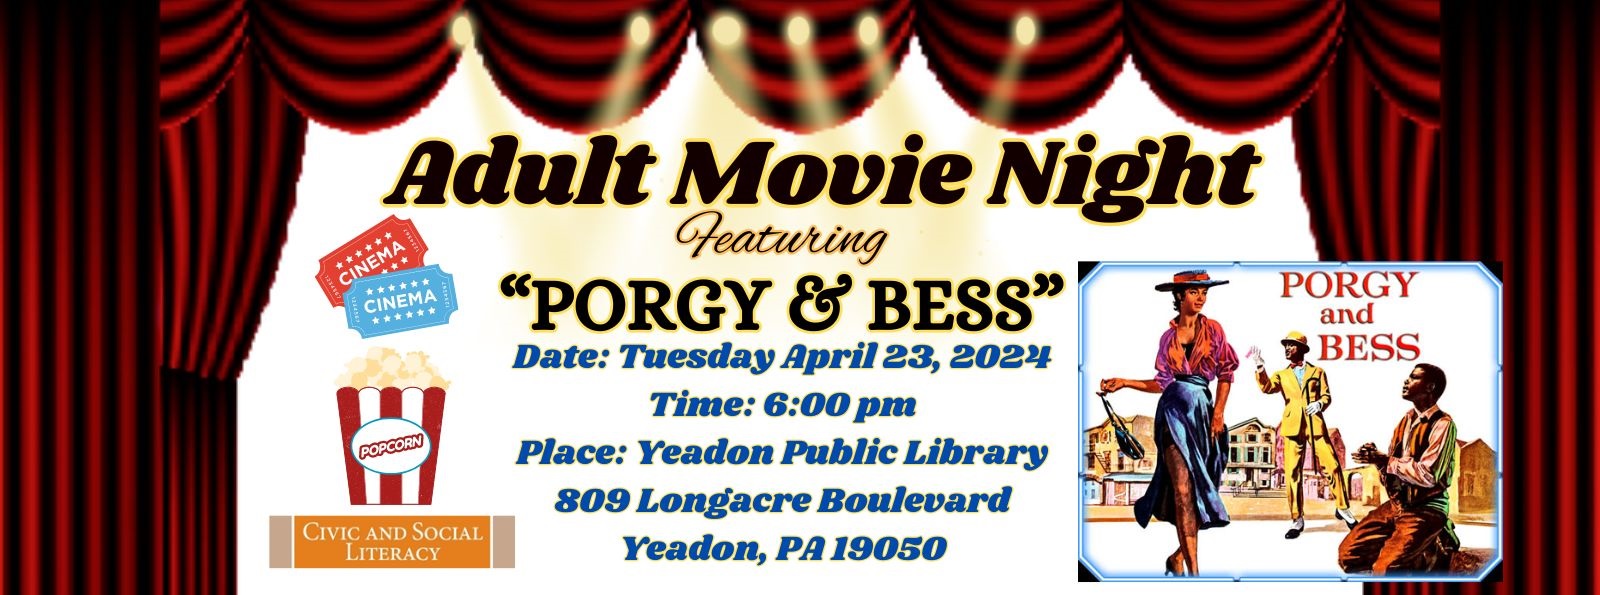 Porgy & Bess Adult Movie Night